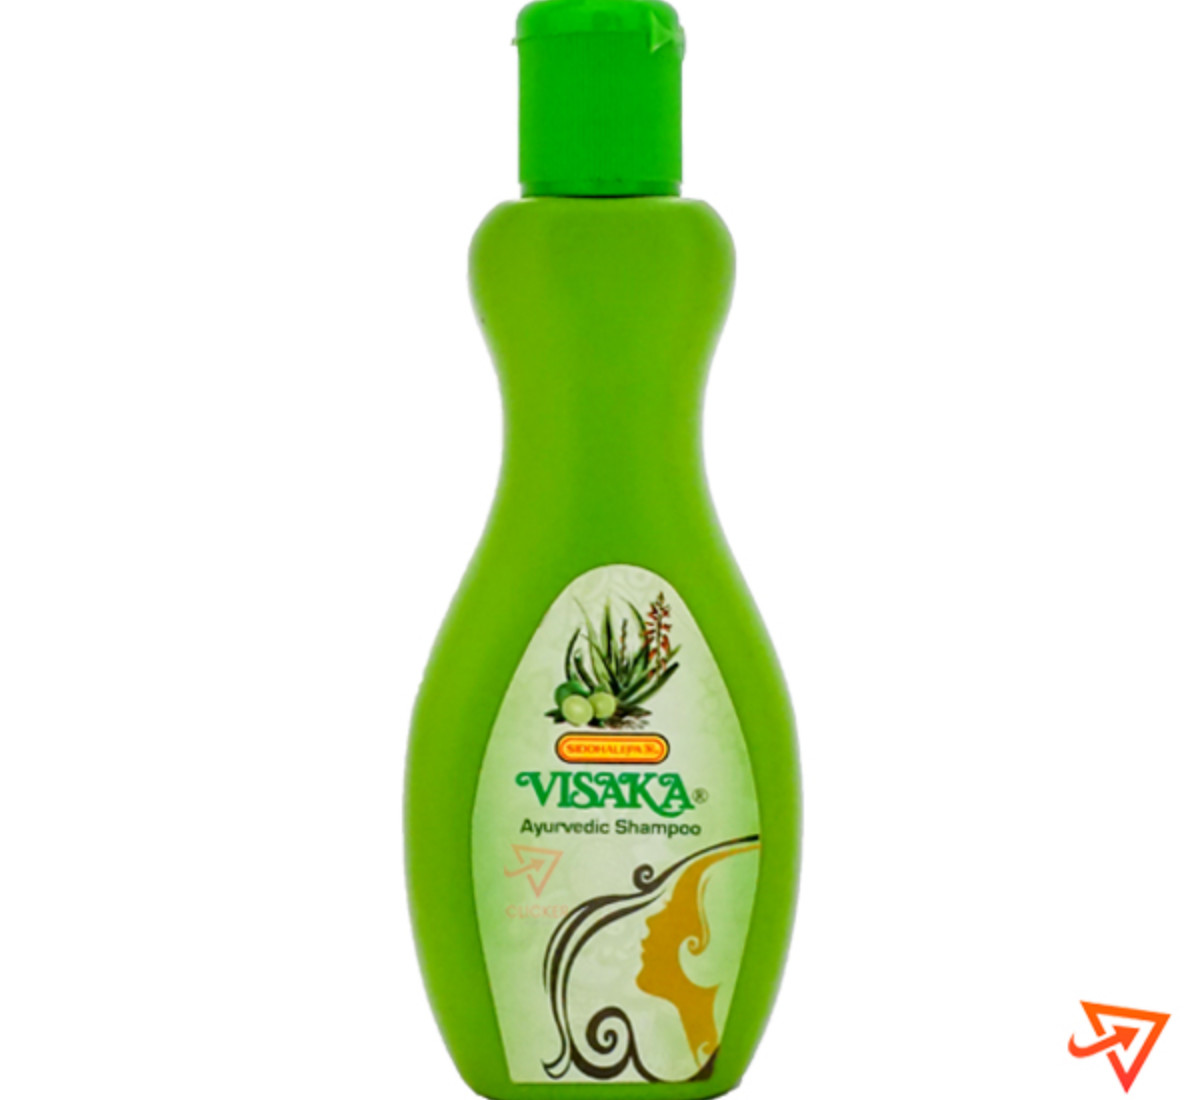 Clicker product 100ml SIDDHALEPA visaka ayurvedic shampoo 1071